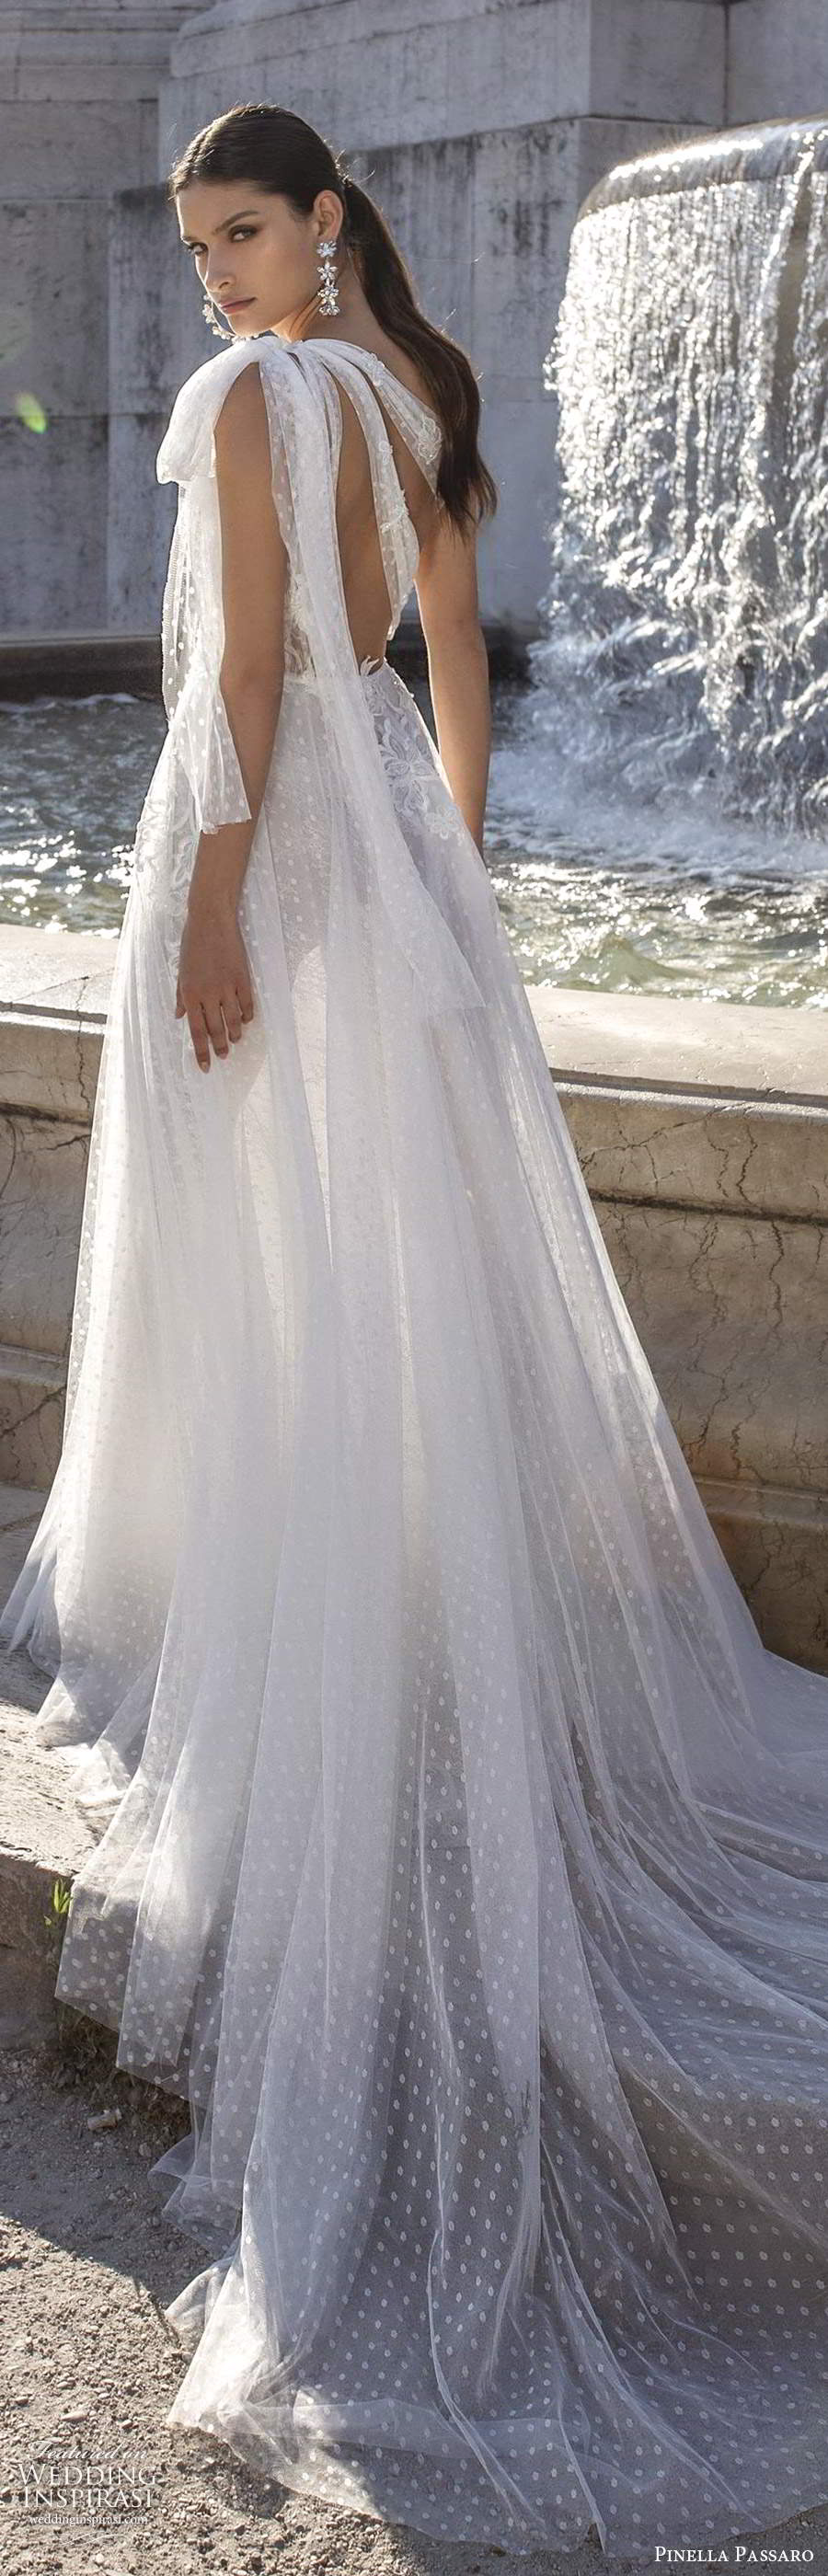 pinella passaro 2020 bridal one shoulder strap sheer bodice a line ball gown wedding dress sheer back chapel train (4) bv